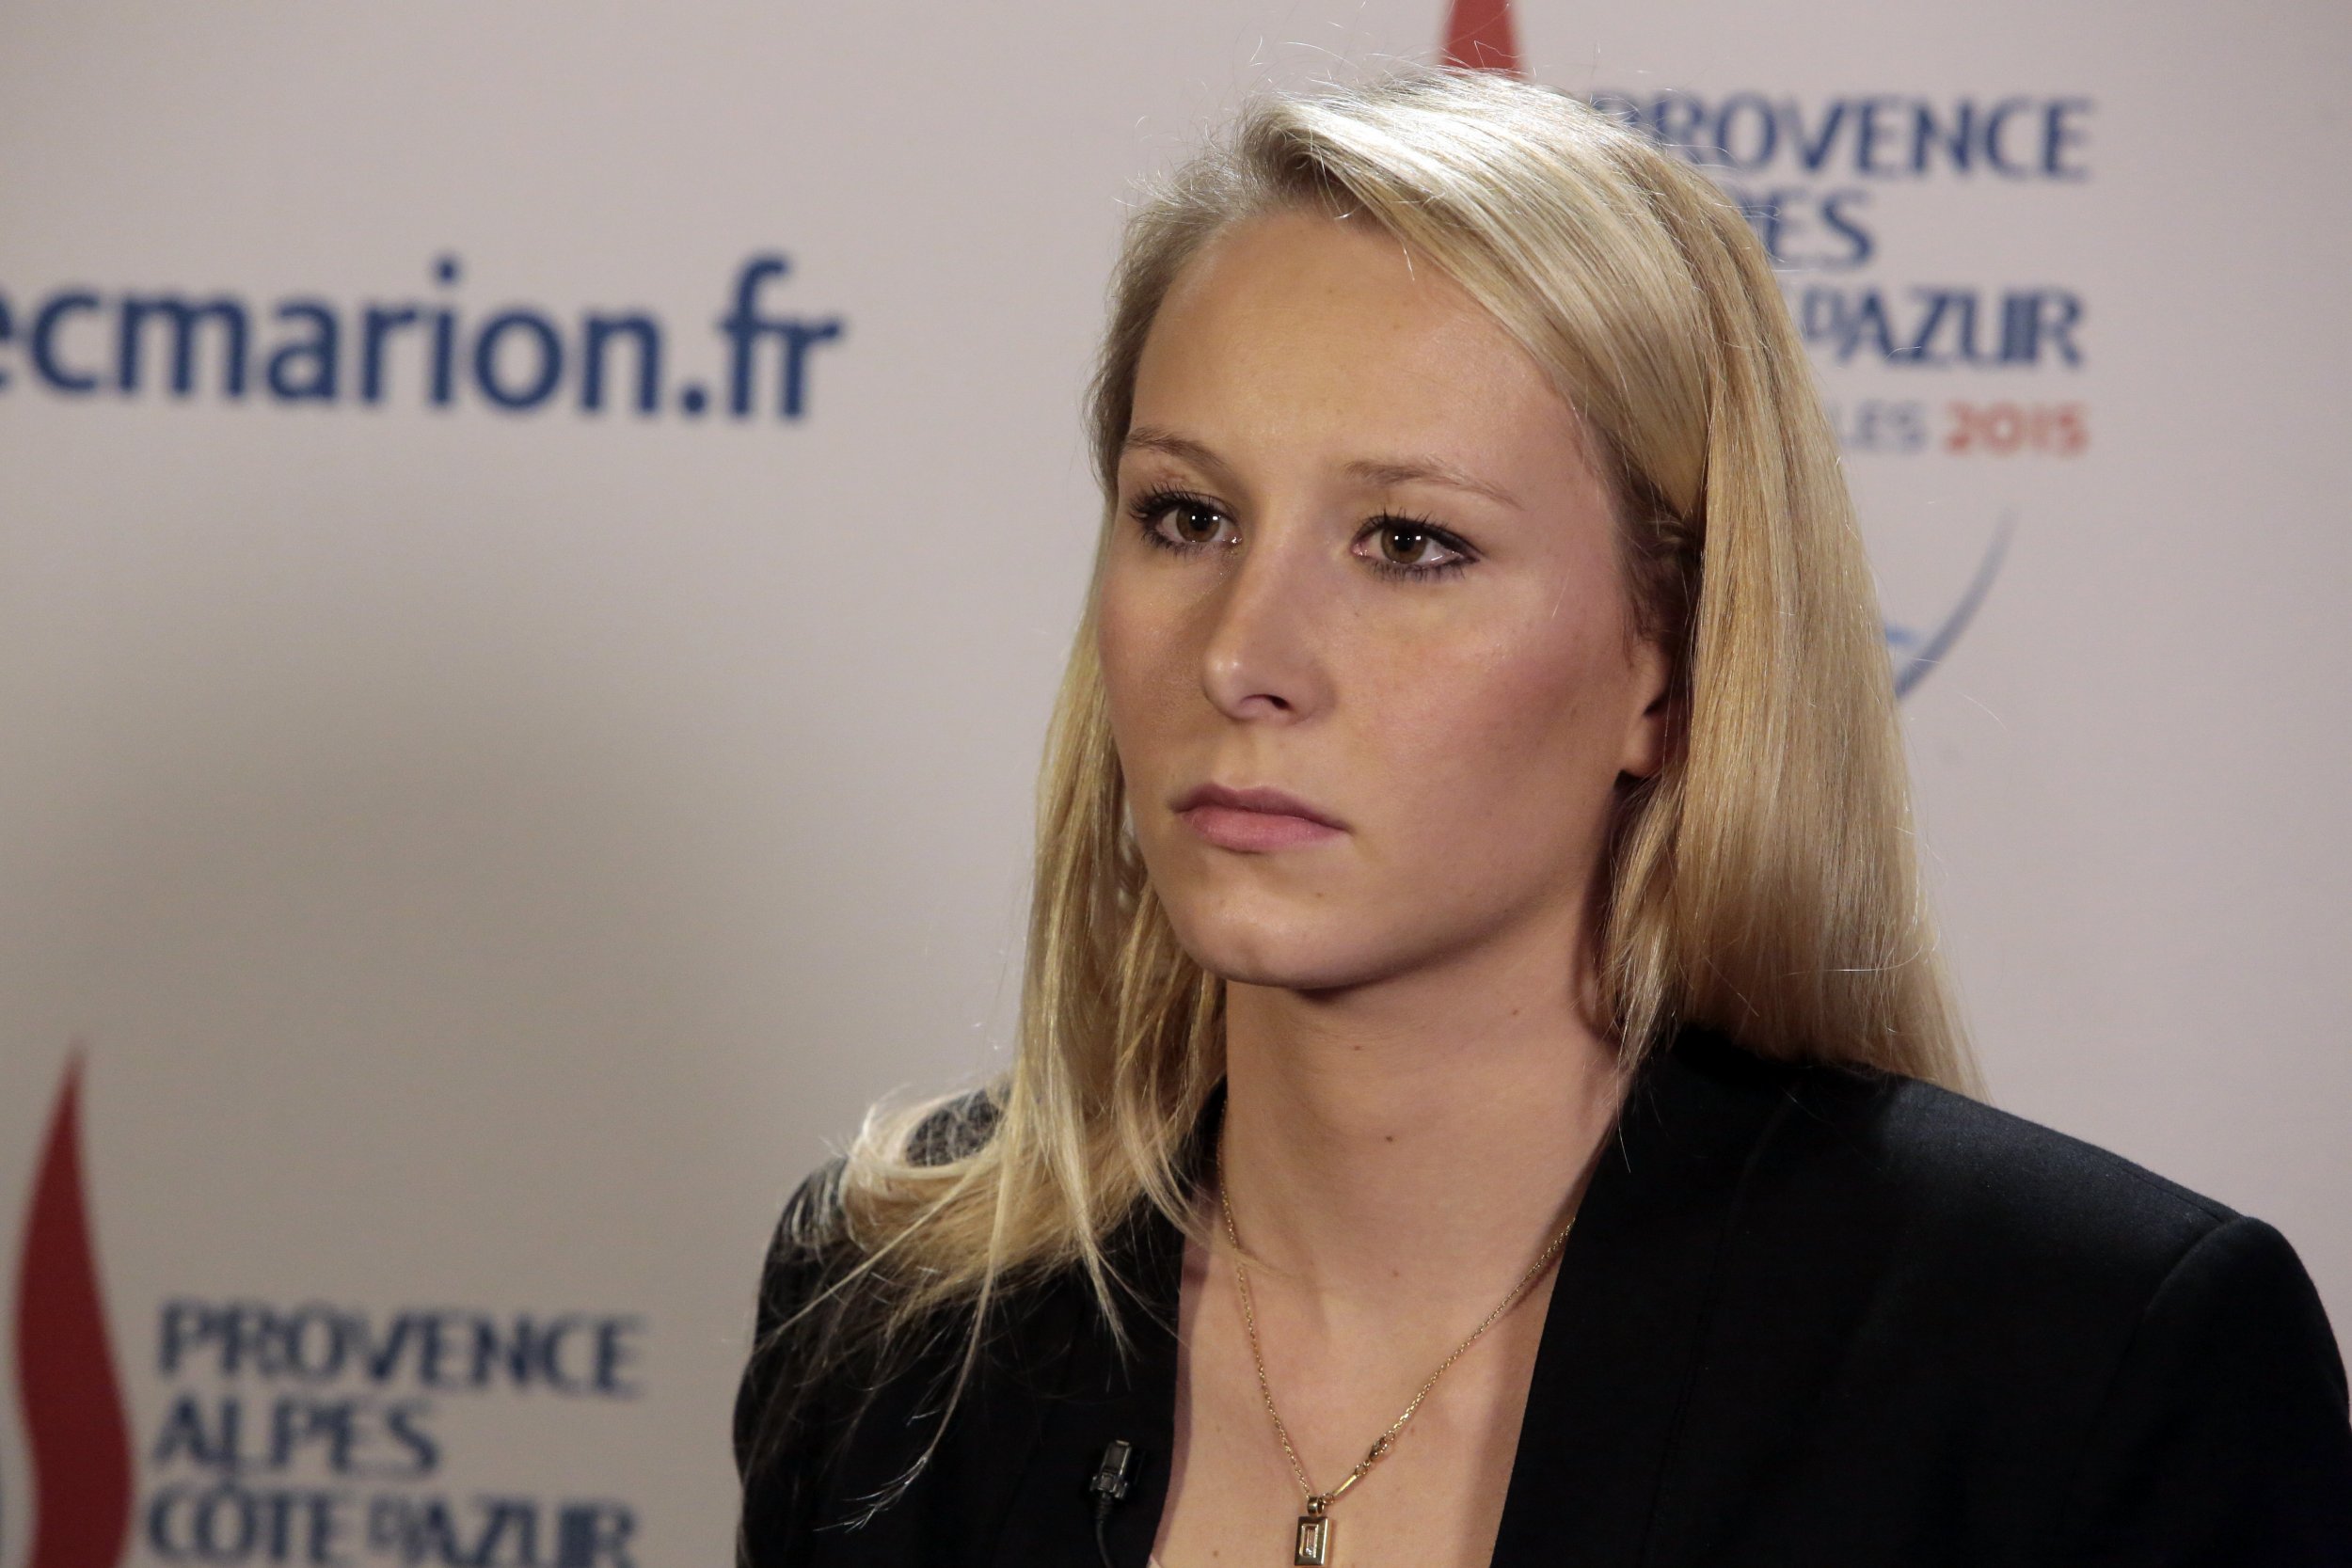 Station succes Ontslag nemen CPAC: French Far-Right's Marion Maréchal-Le Pen to Address GOP Leaders